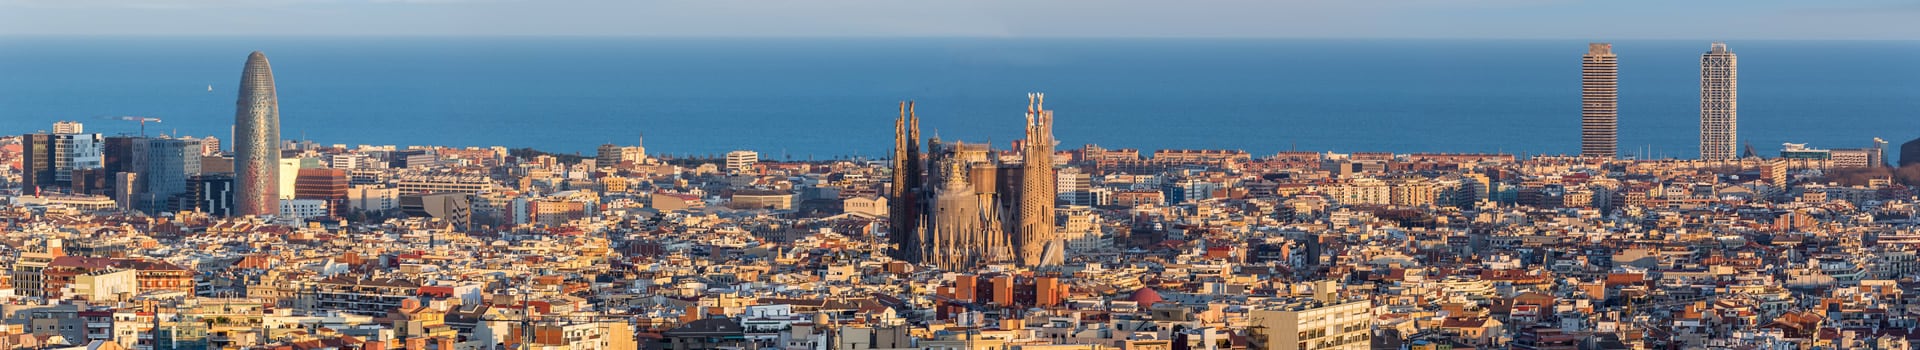 Billetes de Barco de Formentera a Cataluña